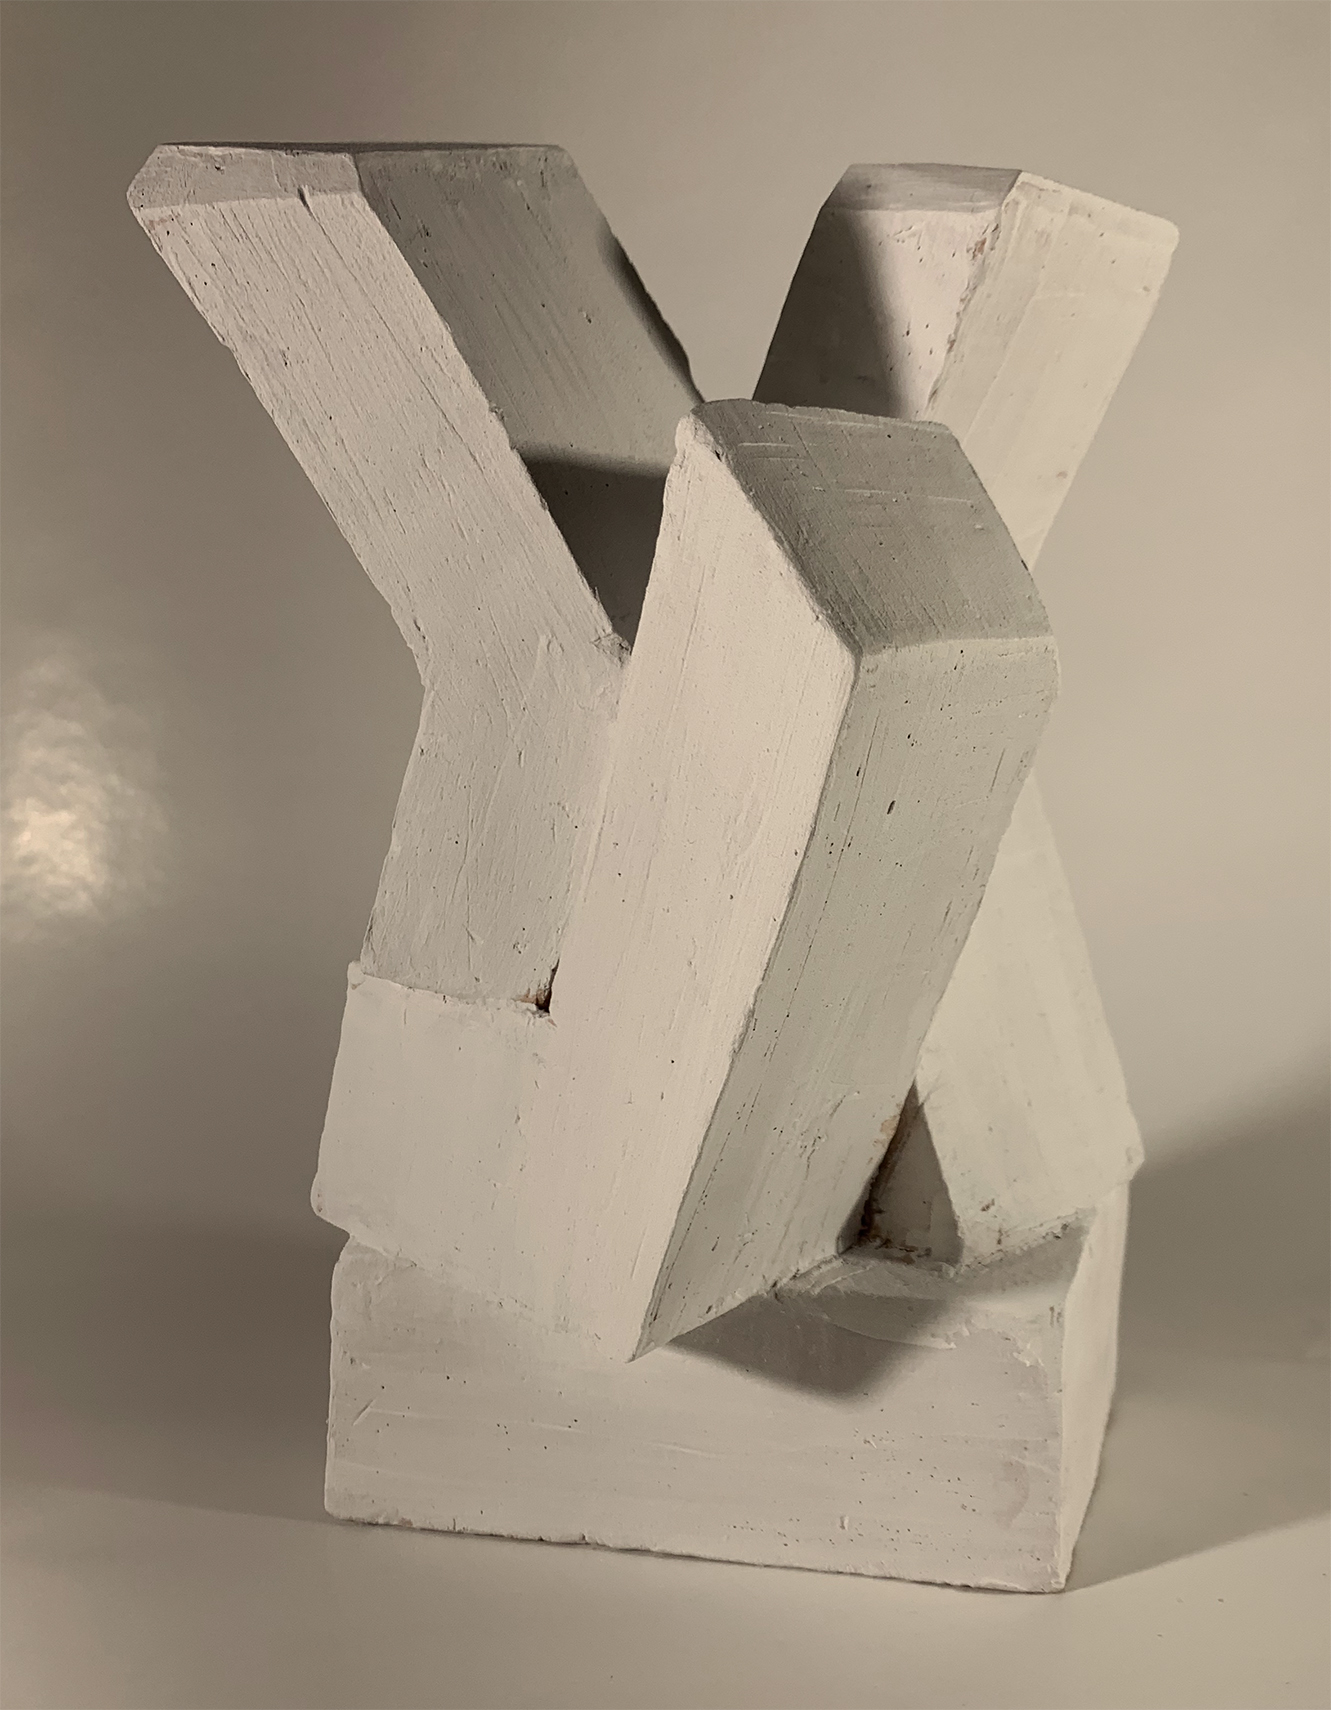 dahlia-meqdadi-planar-sculpture